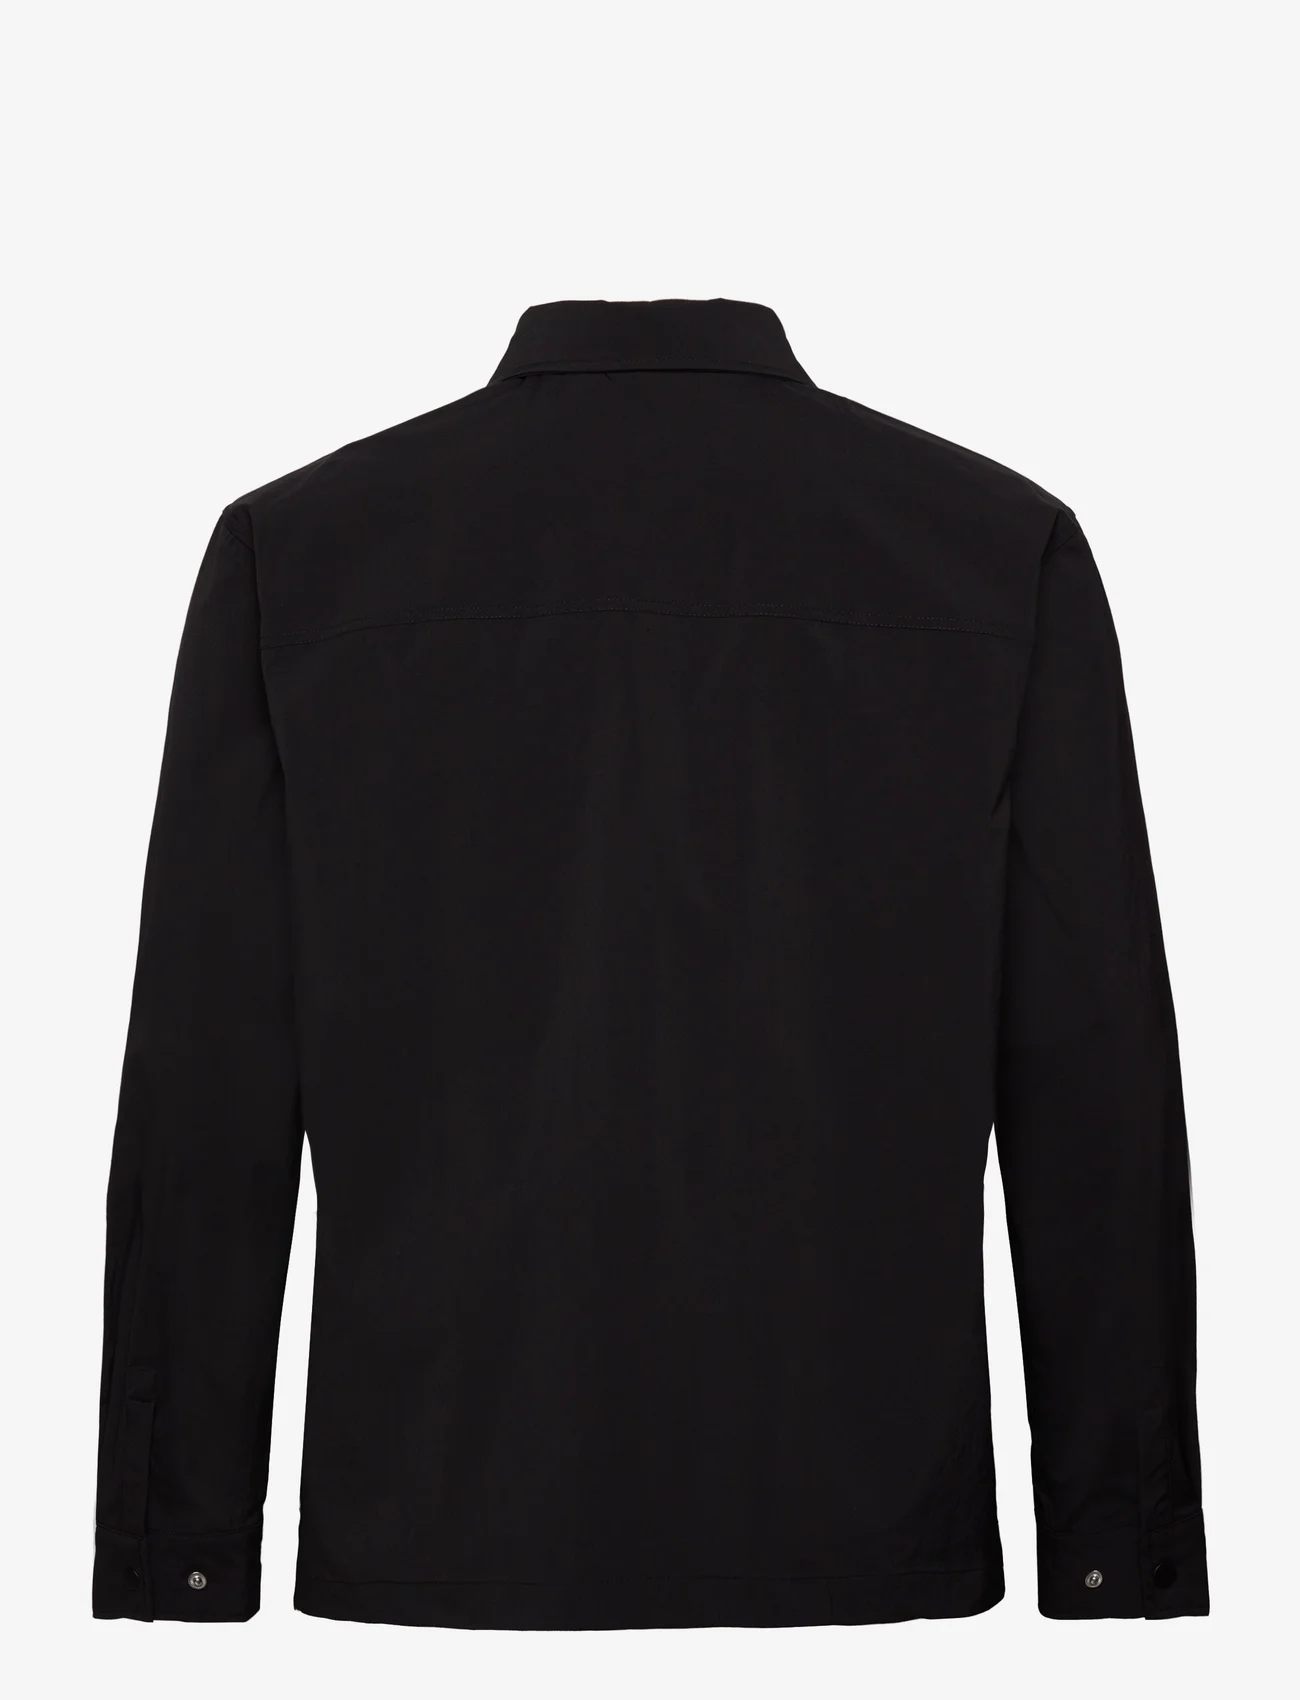 HAN Kjøbenhavn - Nylon Patch Pocket Shirt Long Sleeve - mężczyźni - black - 1